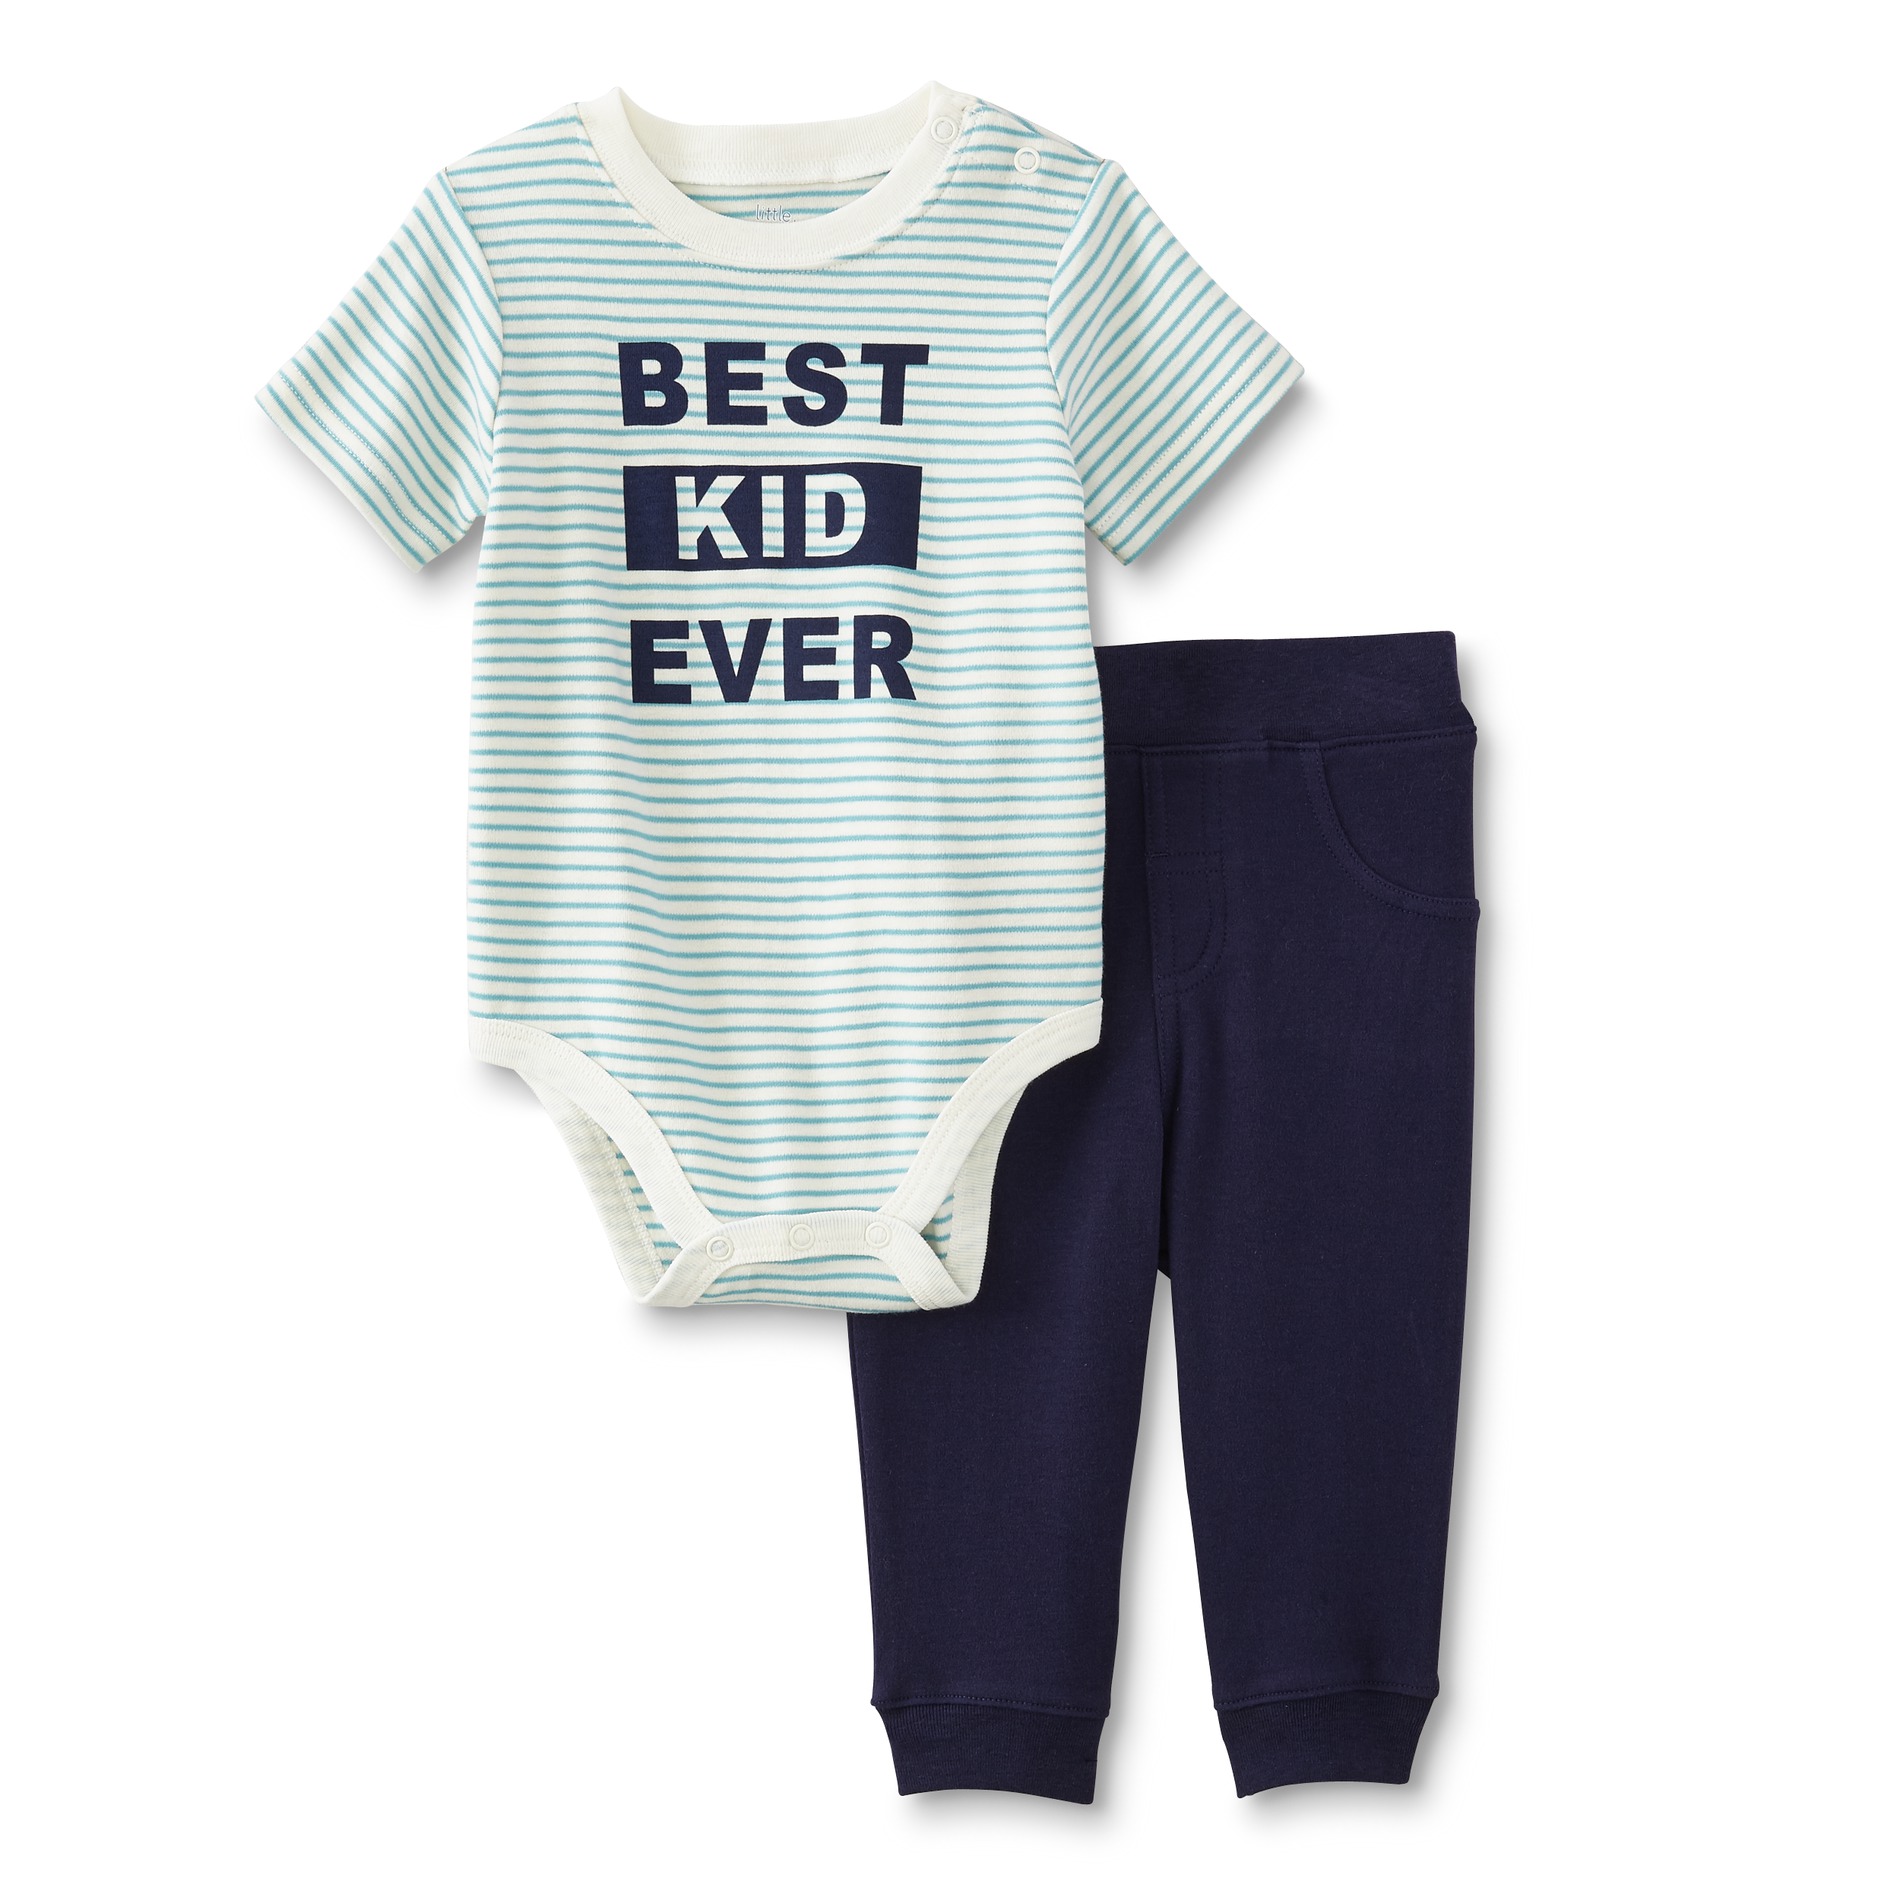 Little Wonders Infant & Newborn Boys' Bodysuit & Jogger Pants - Best Kid Ever